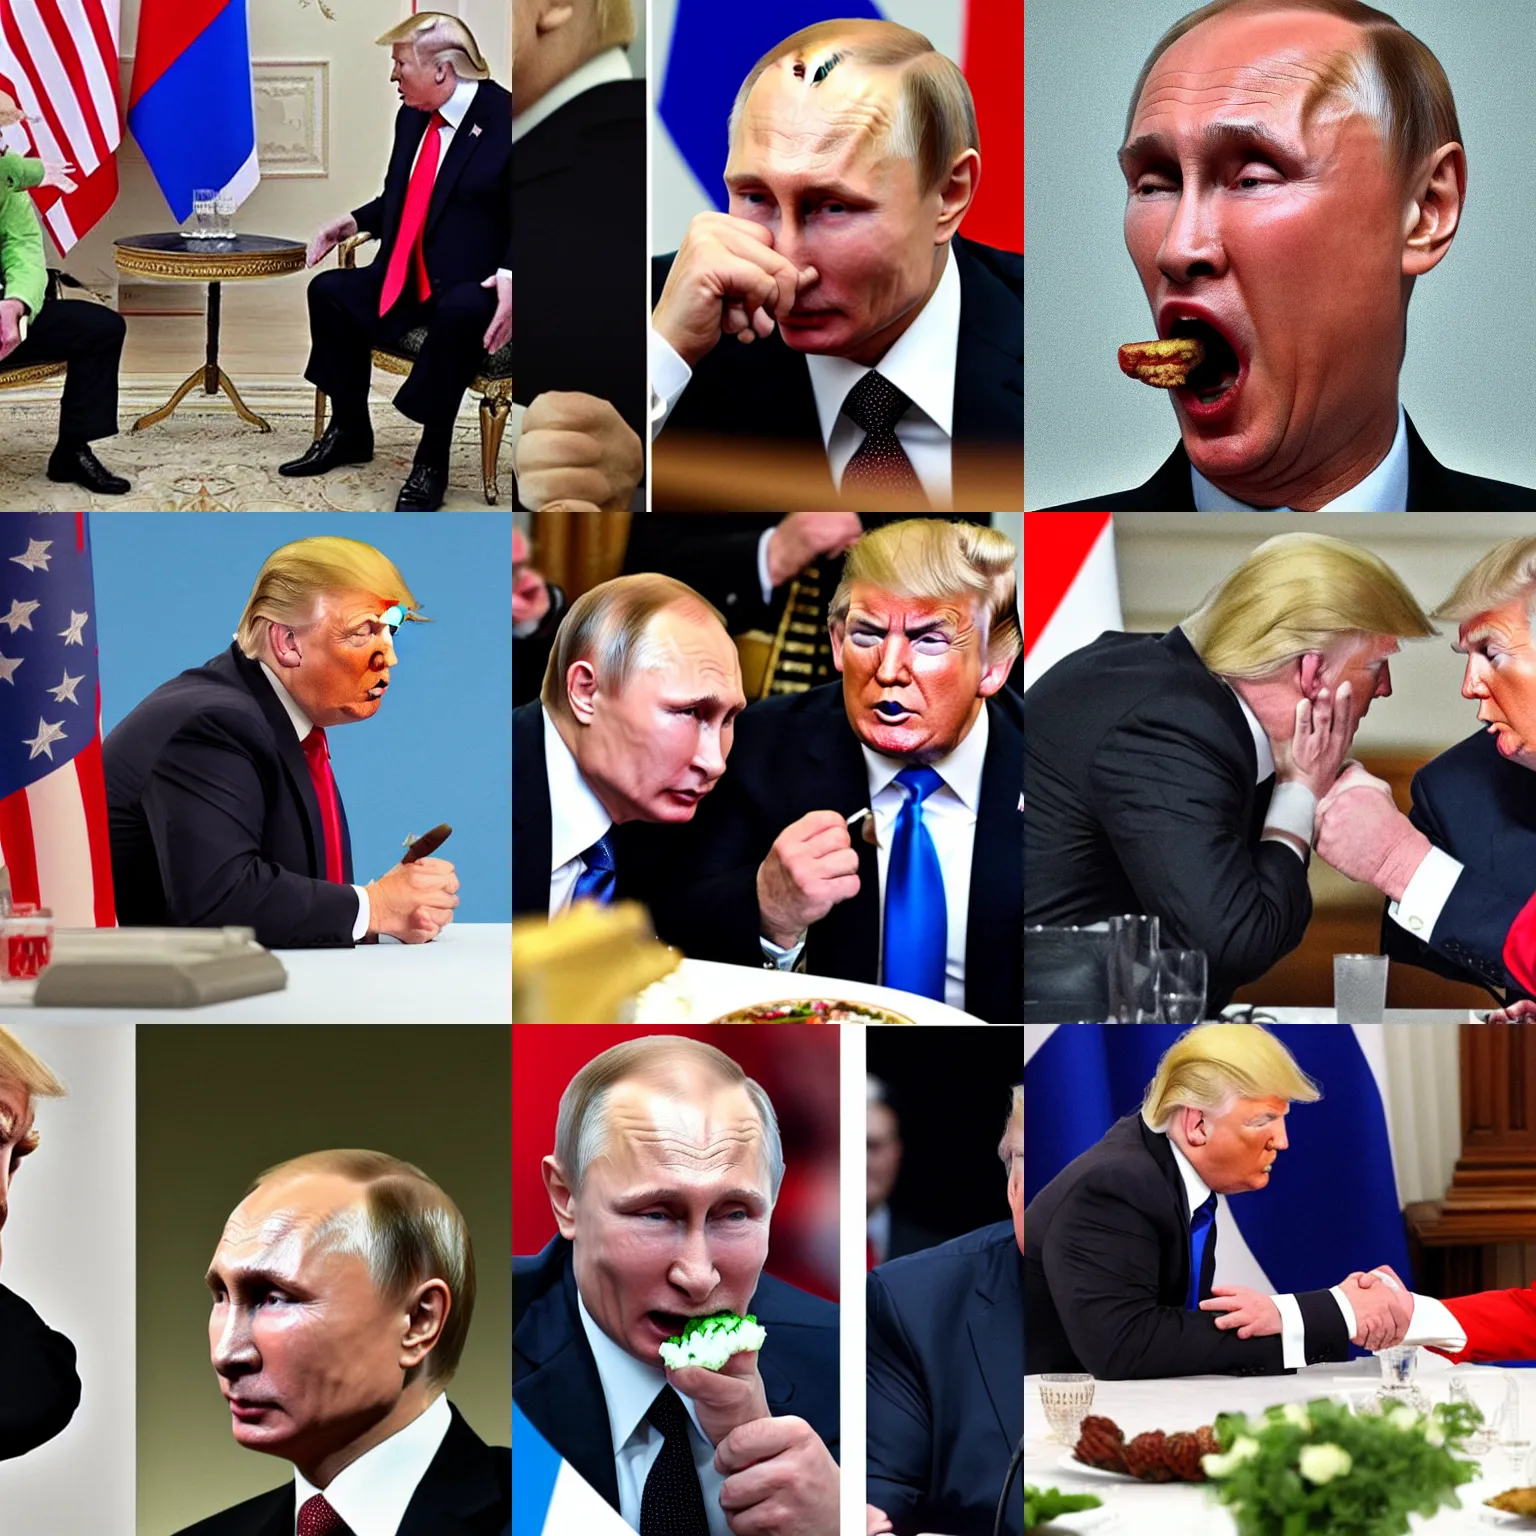 Prompt: Putin eating Trump